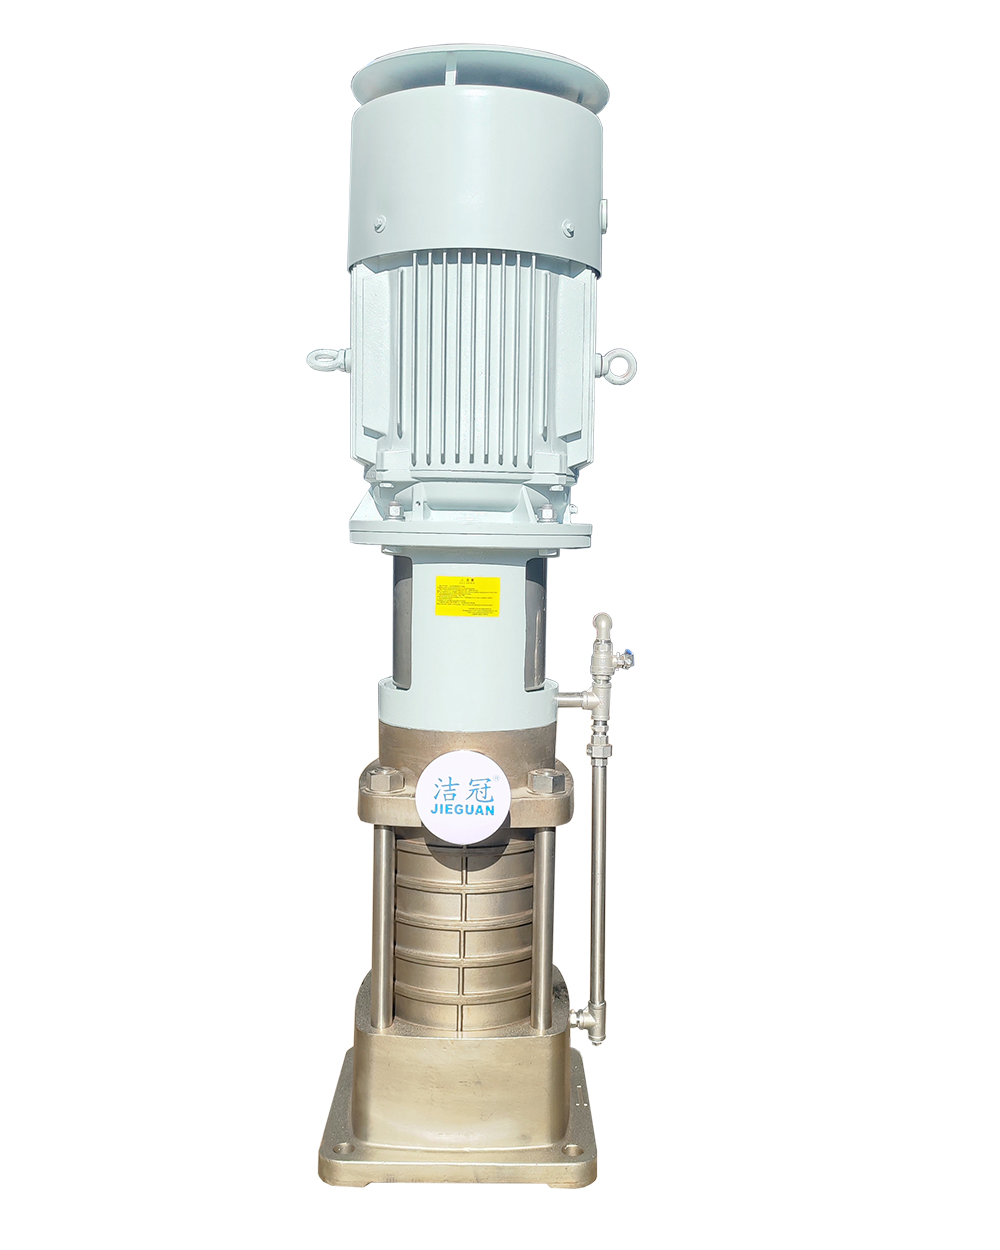 JIEGUAN DL-G8 series marine vertical multistage centrifugal pump